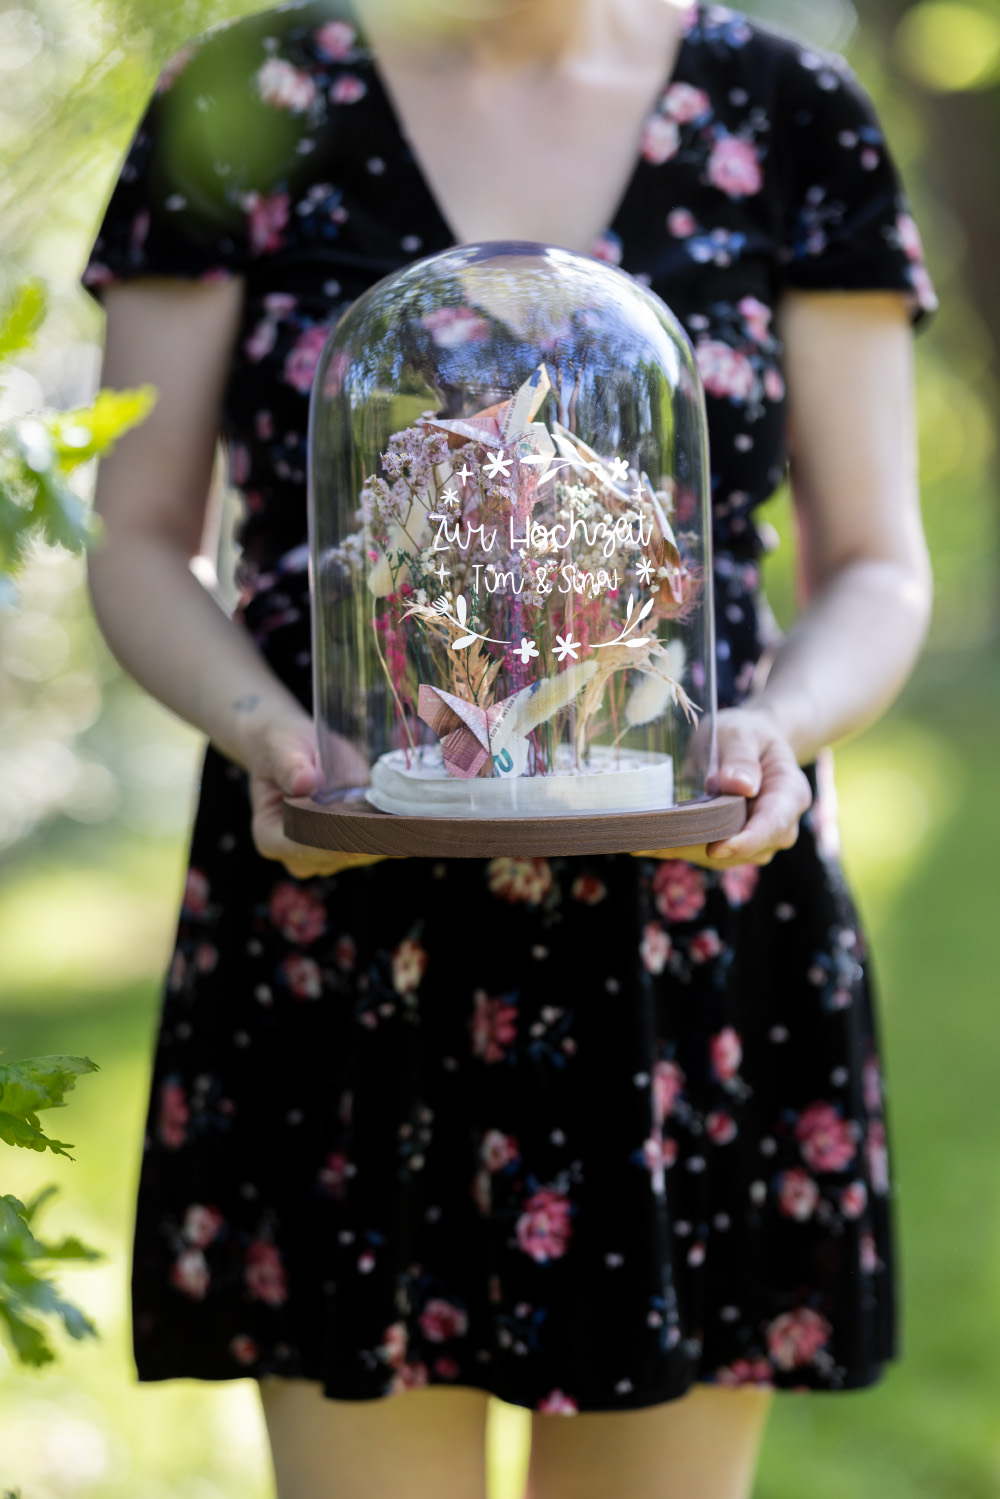 Cash gift butterflies in a glass bell jar #DIYYearChallenge